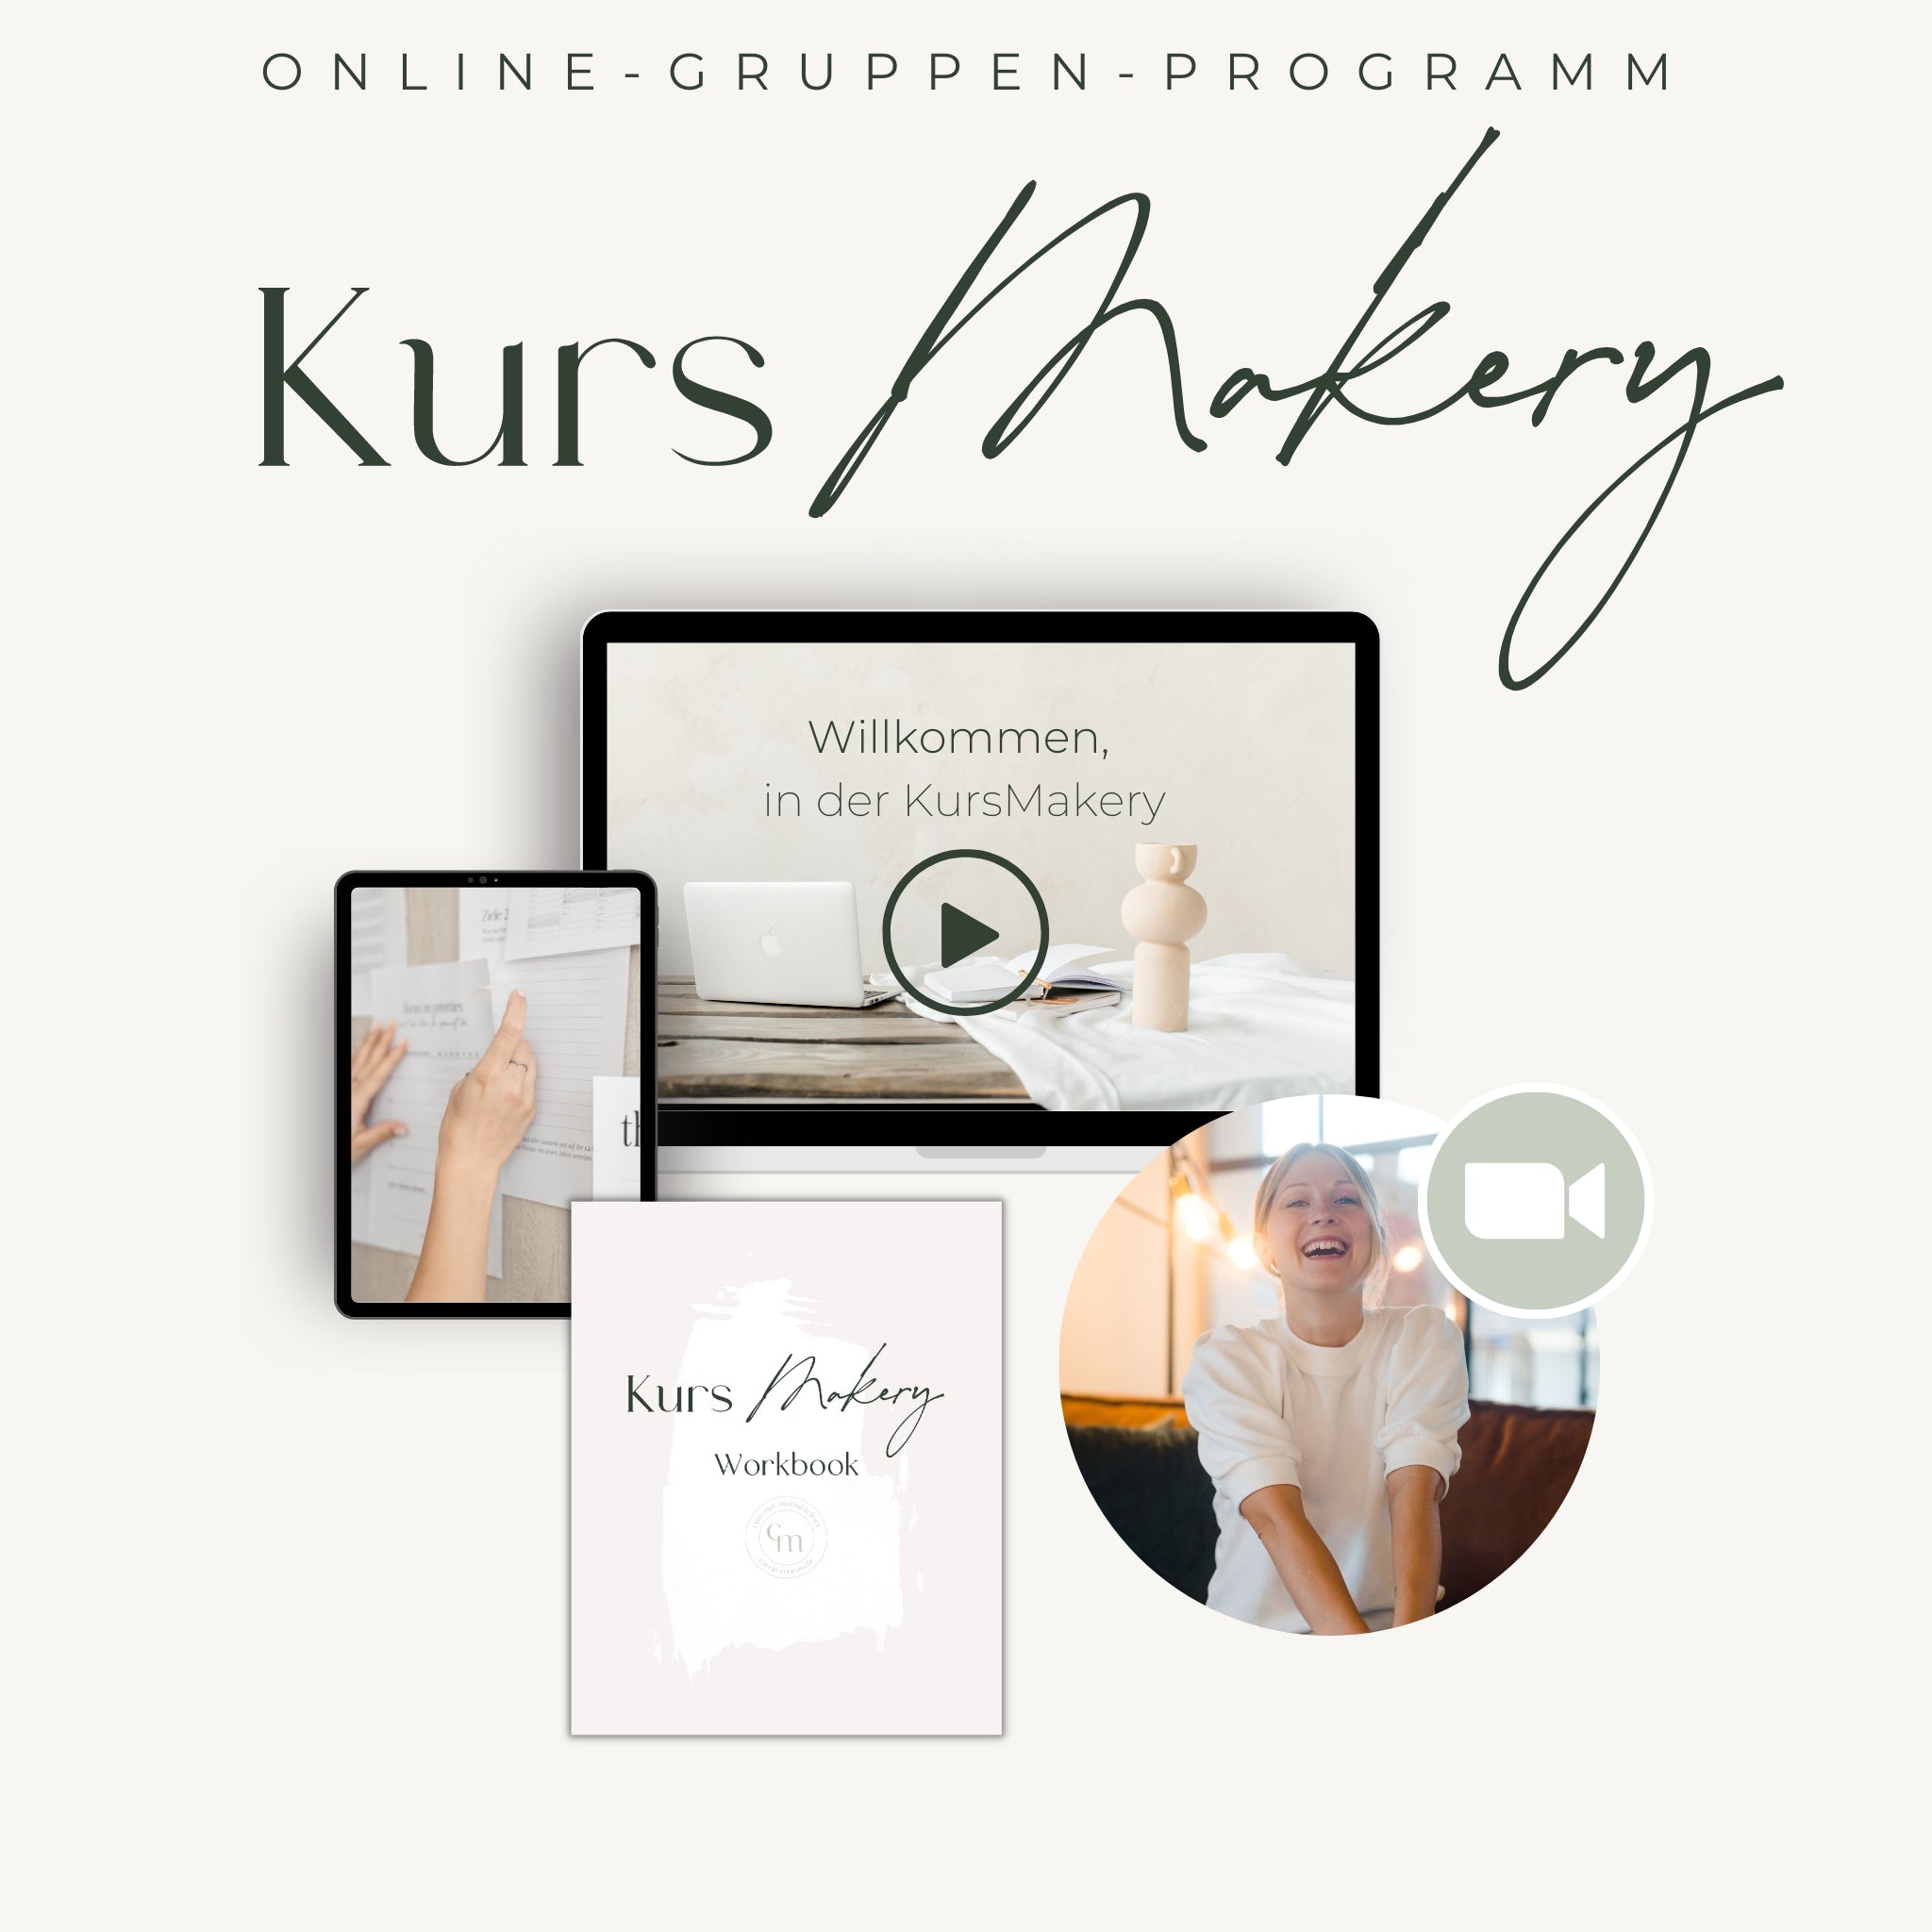 KursMakery Online-Gruppenprogramm